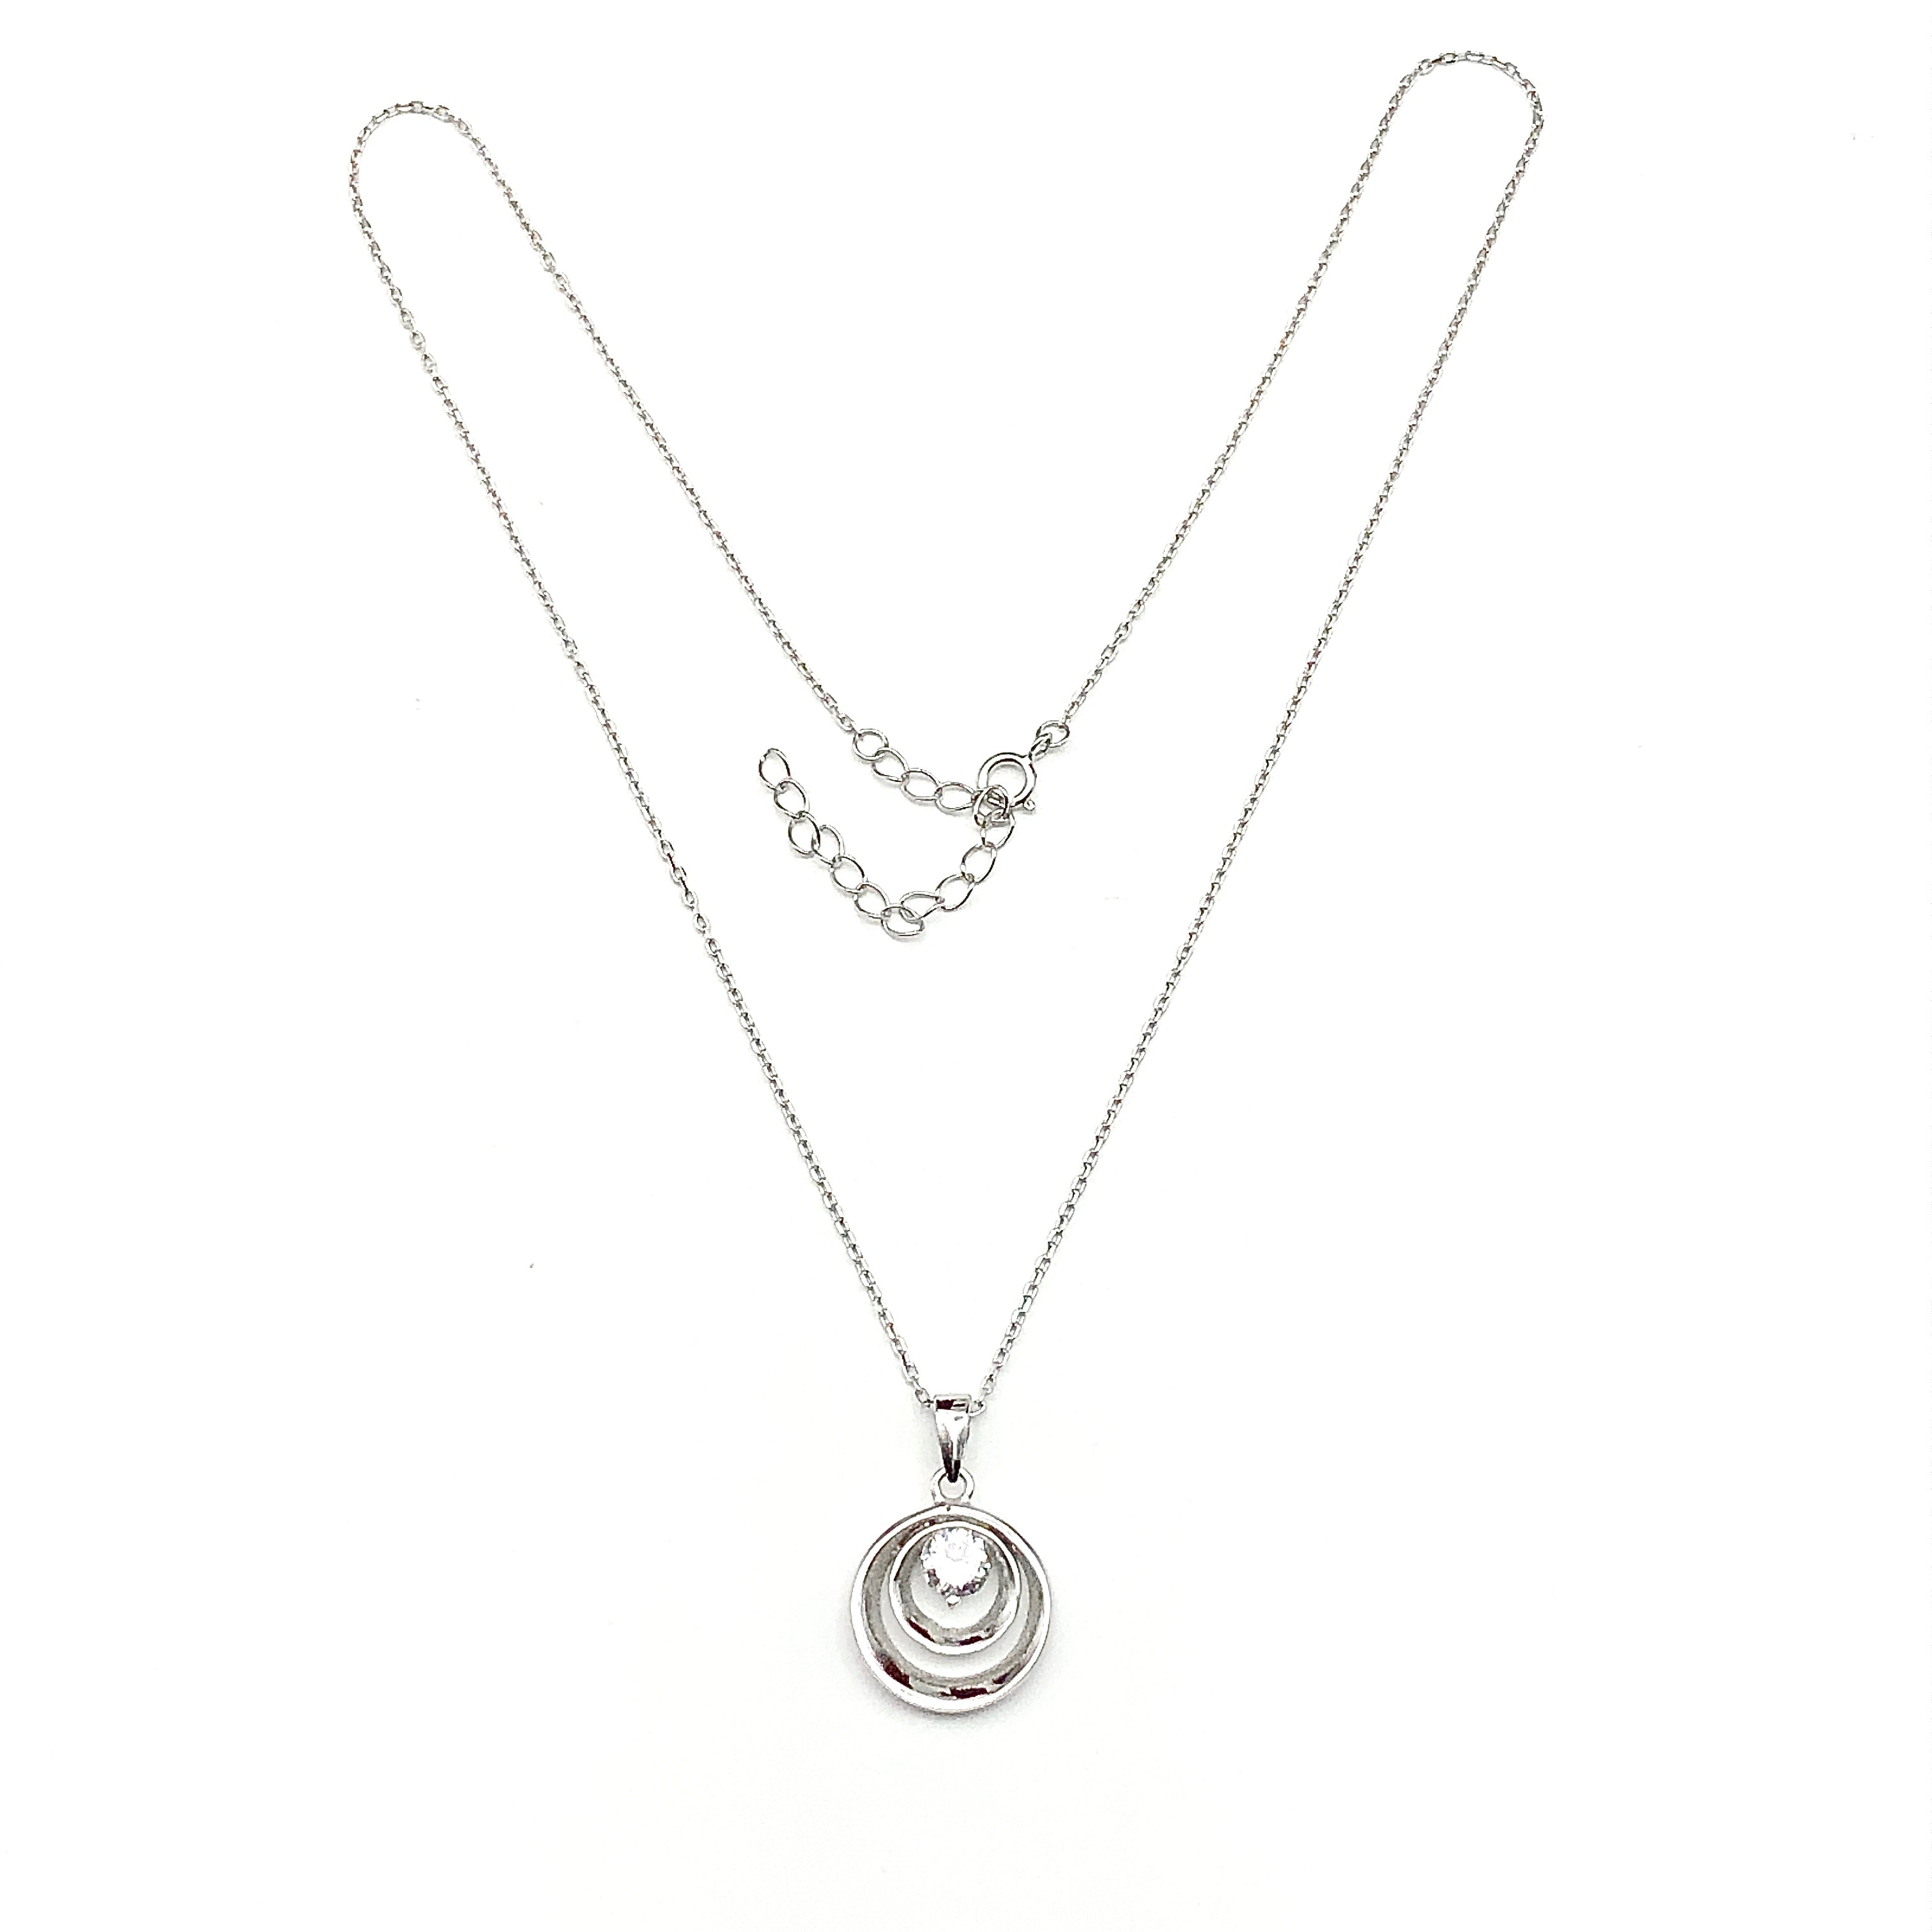 Women's Necklace, White Cz Stone Sandblasted Circle Design 925